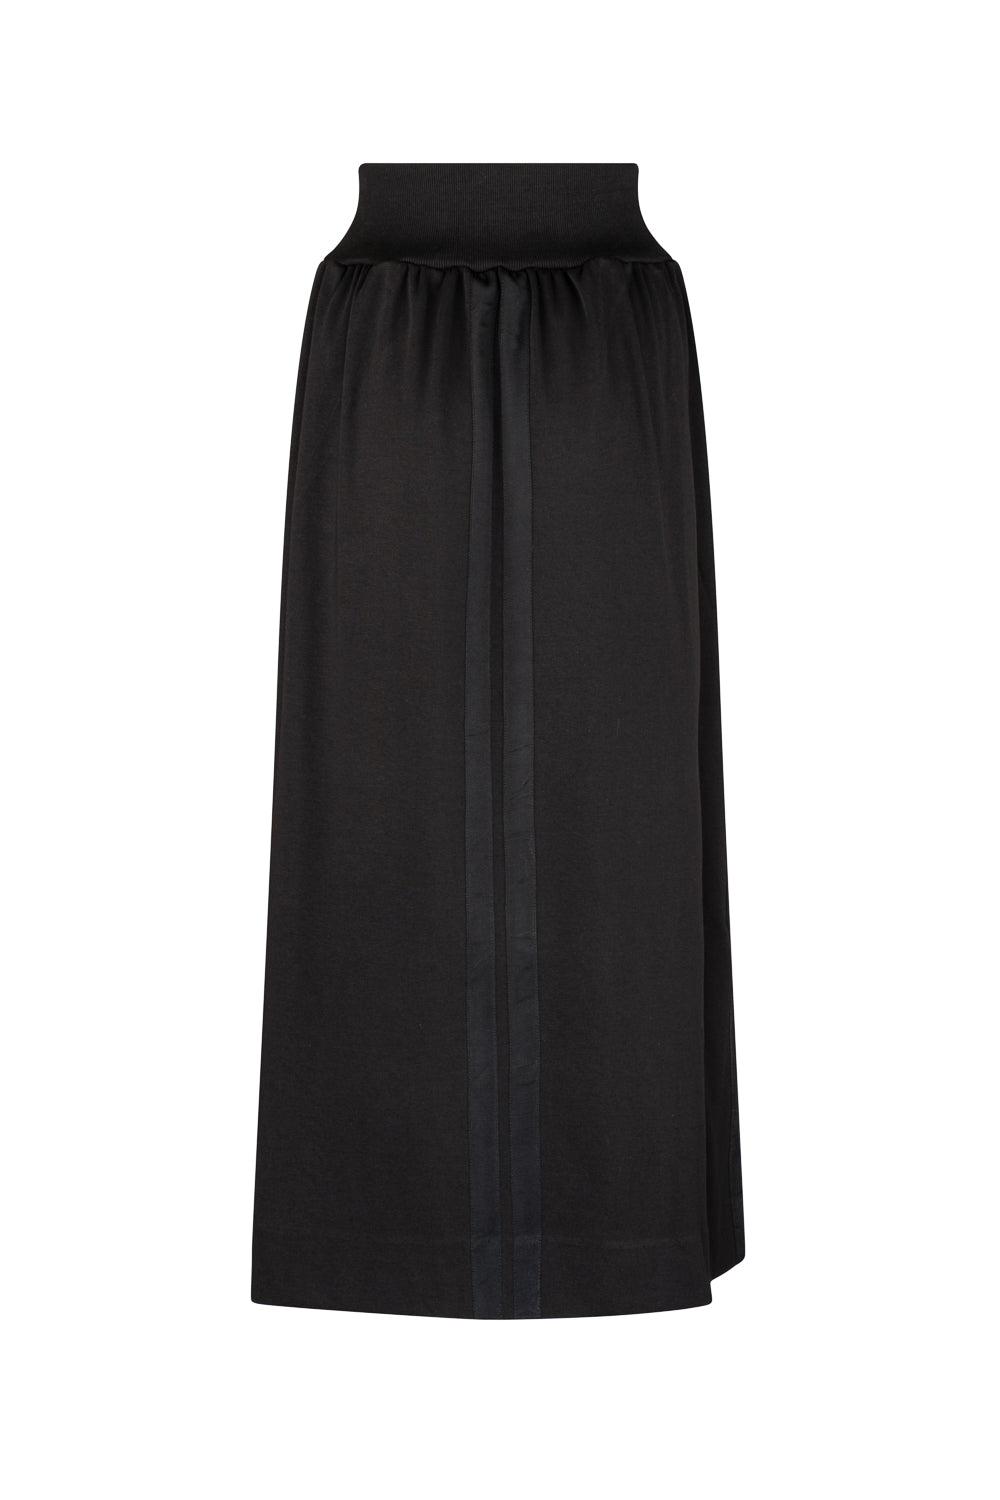 Aurora Skirt - Black